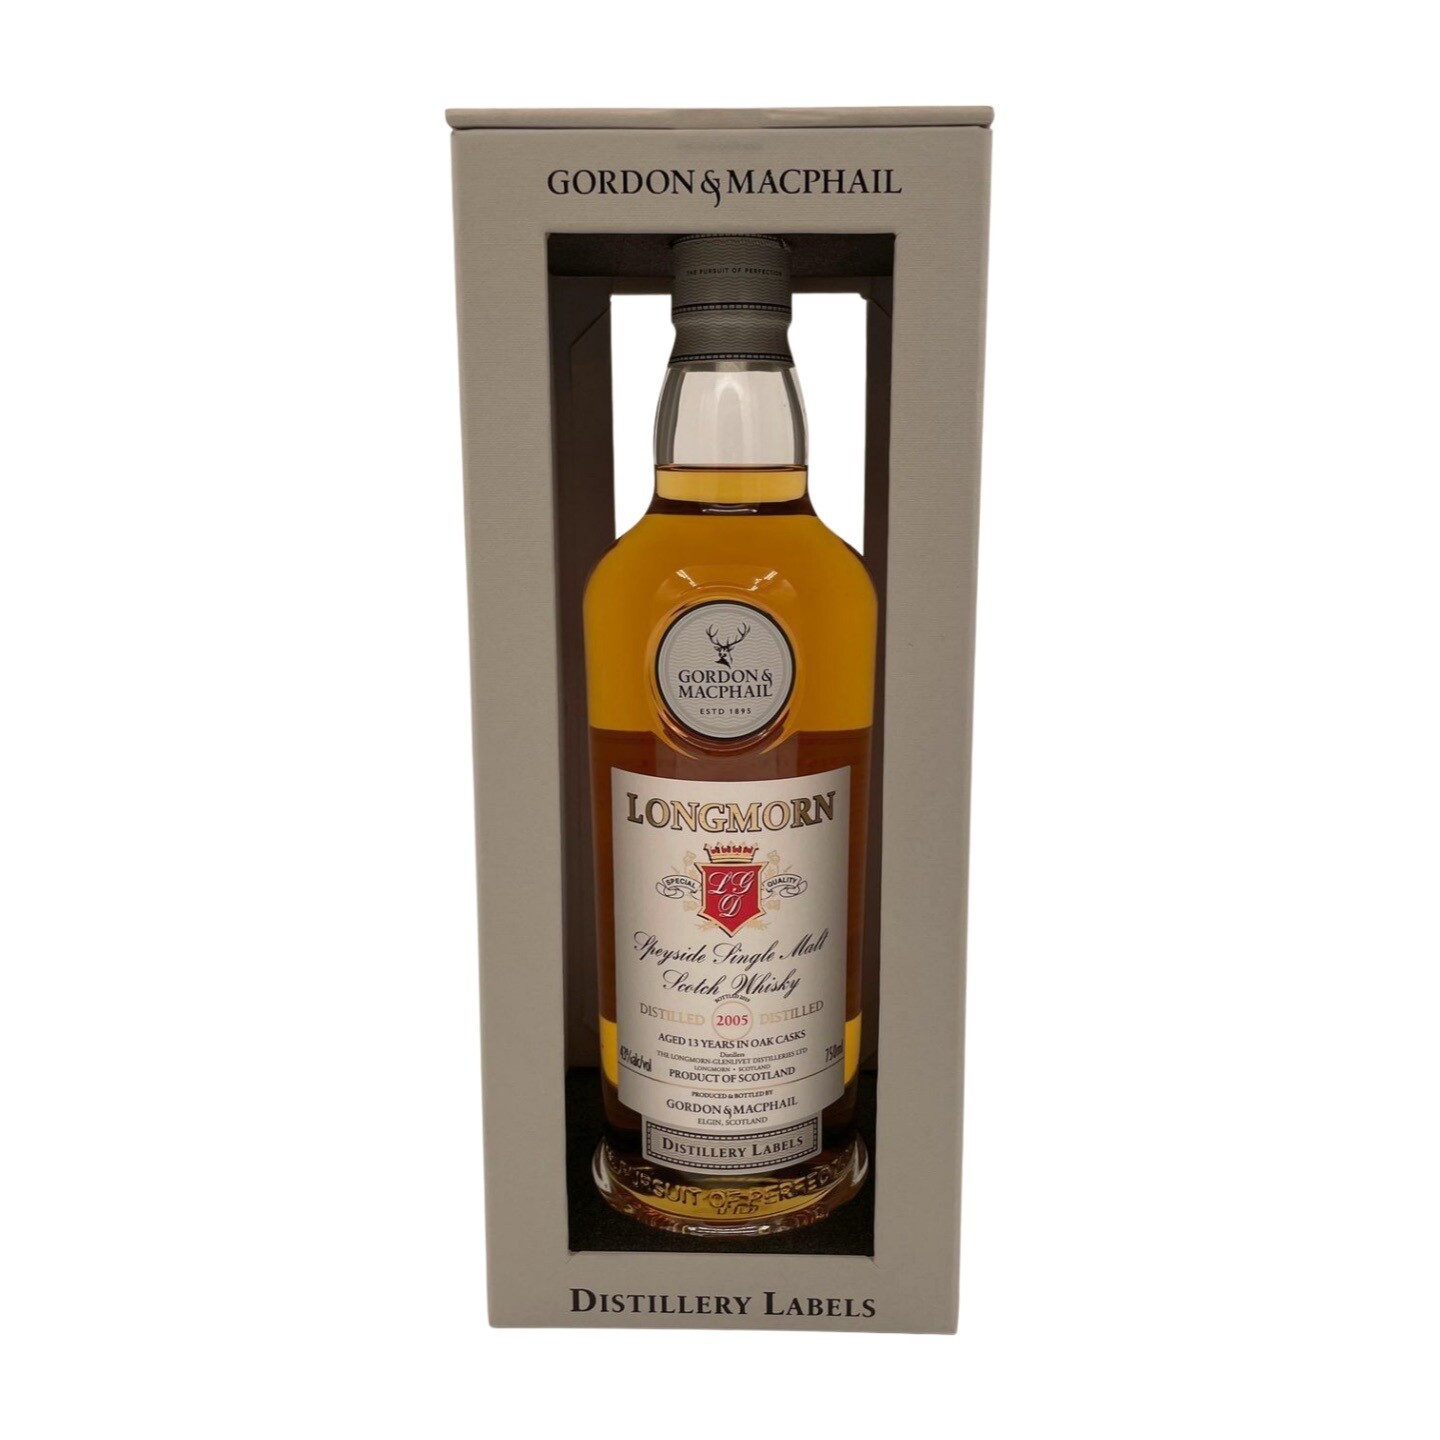 Longmorn (Gordon & MacPhail) 13 Year Speyside Single Malt Scotch Whisky 2005